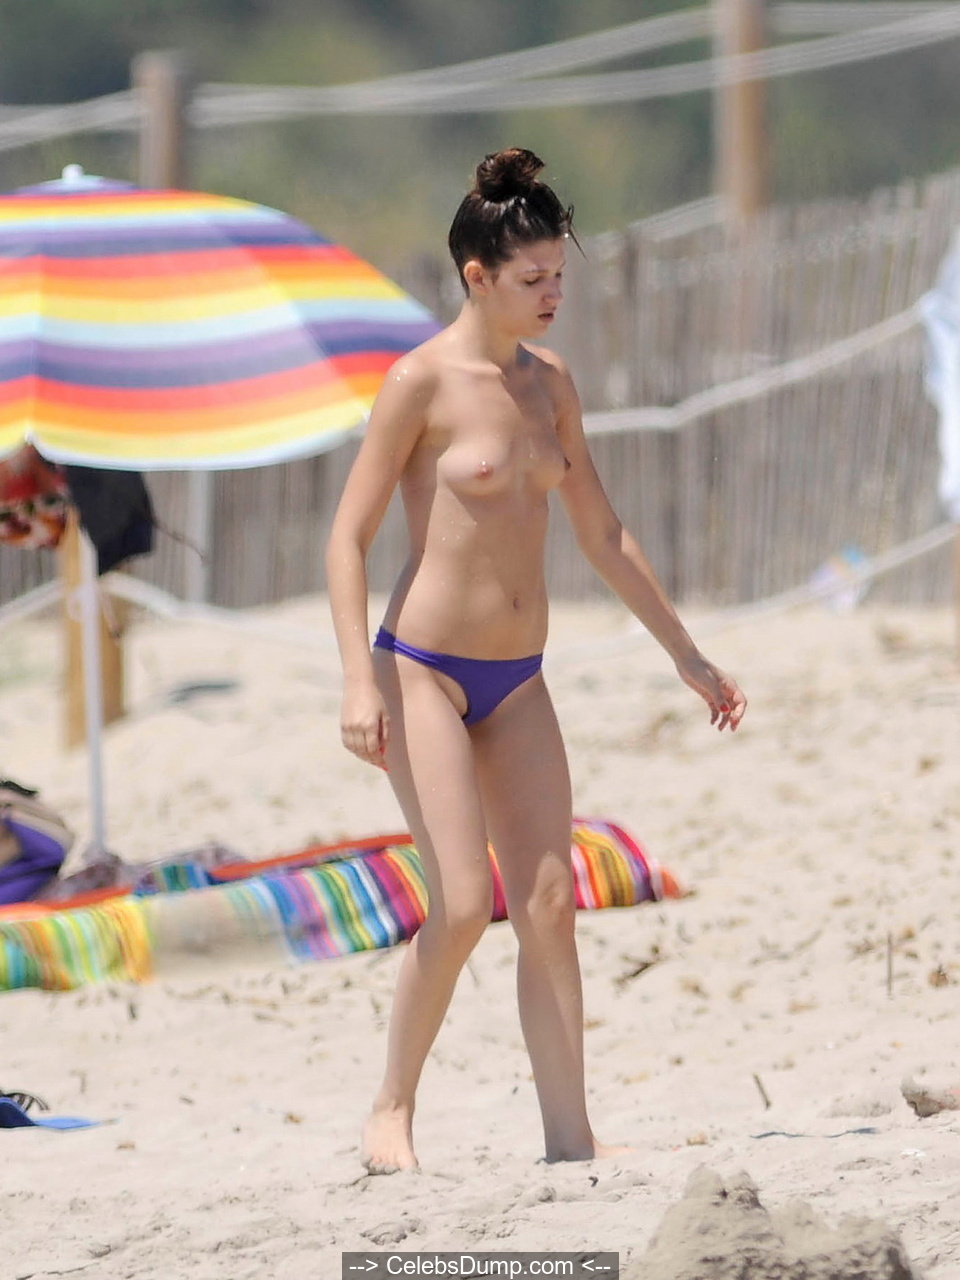 Spanish actress Ursula Corbero topless on a beach paparazzi pictures.